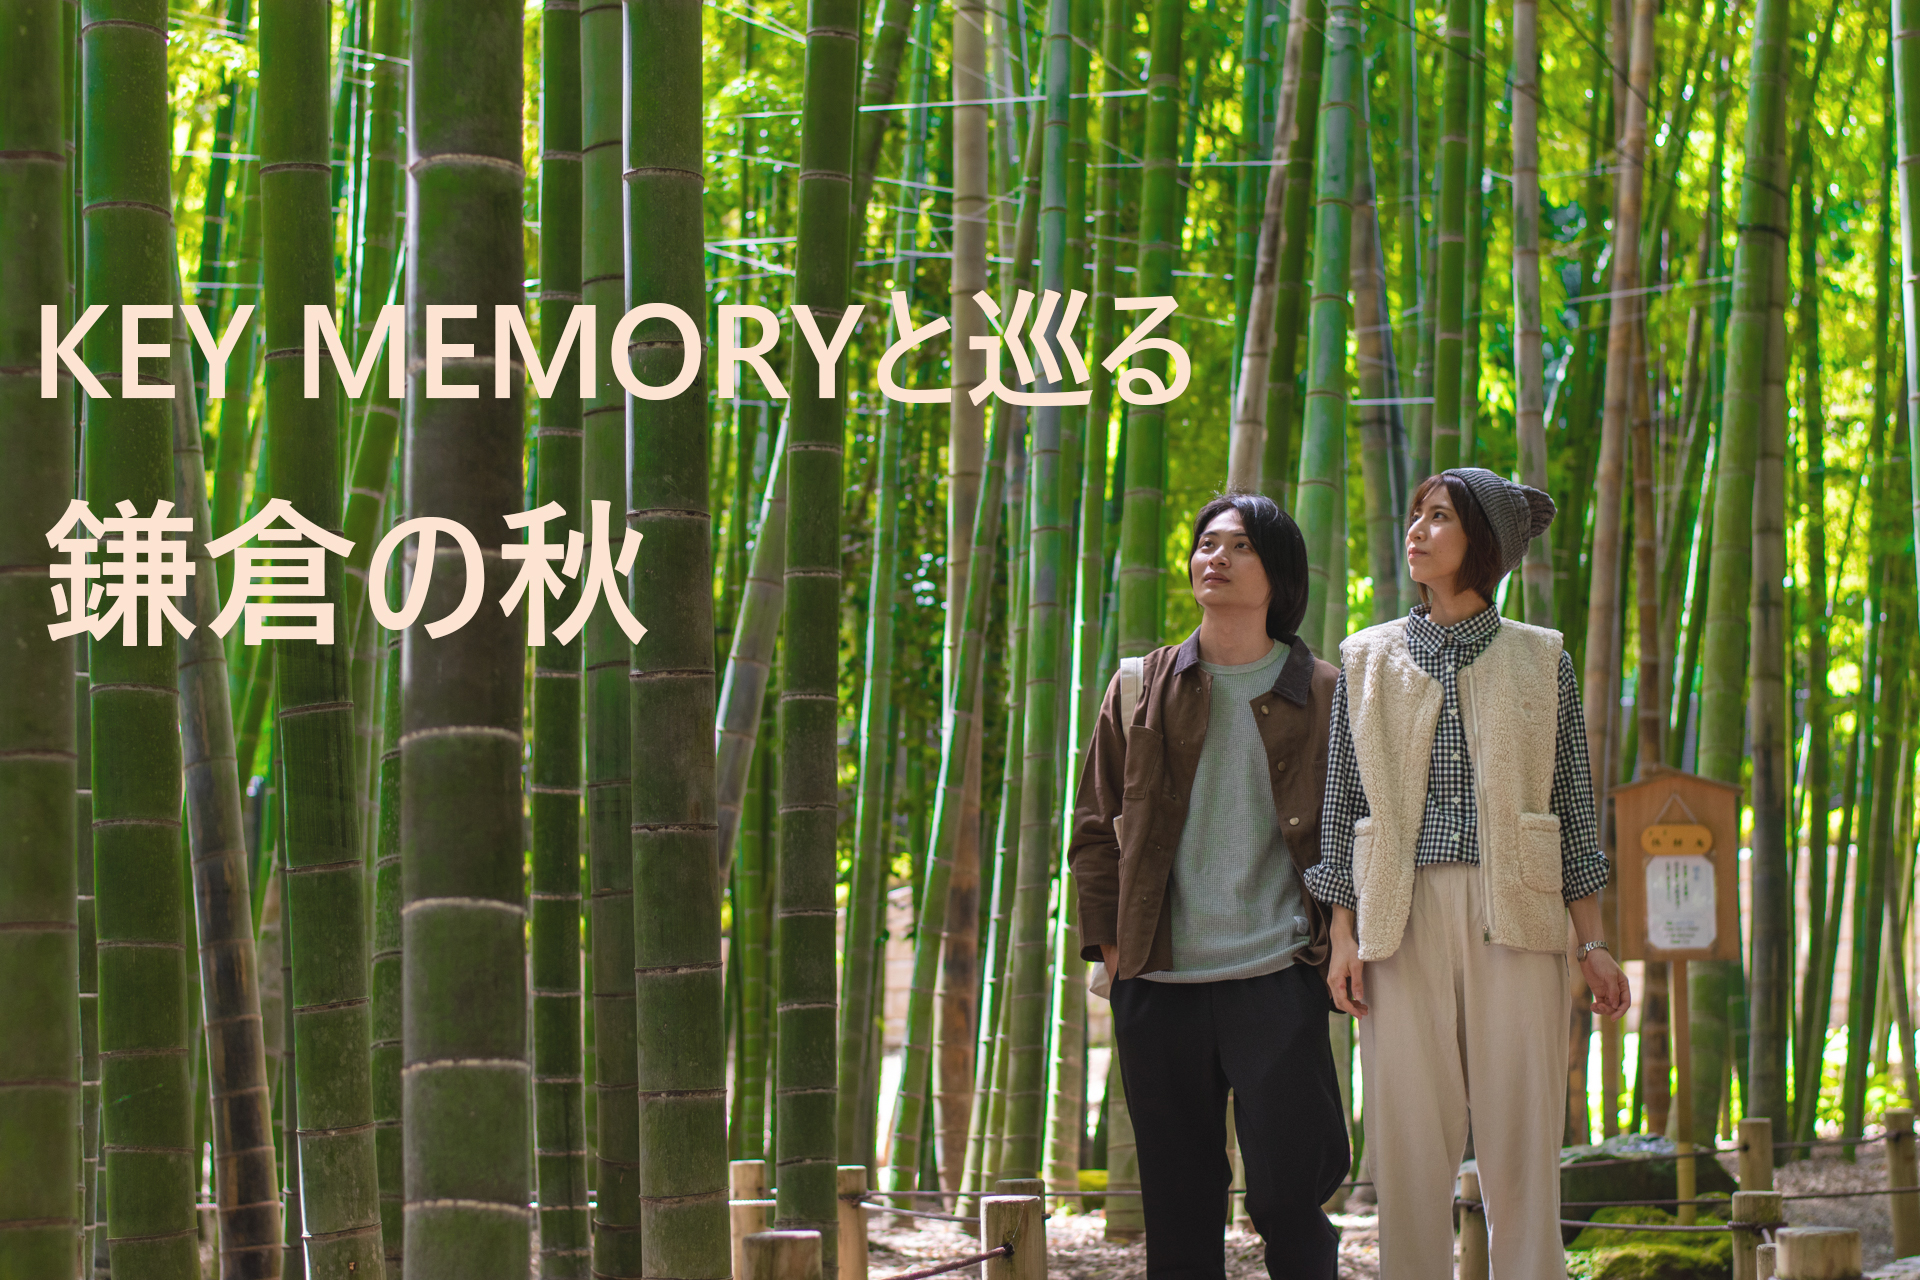 Key Memoryと巡る 鎌倉の秋 Keymemory鎌倉keymemory Blog 鎌倉長谷おすすめ観光スポット